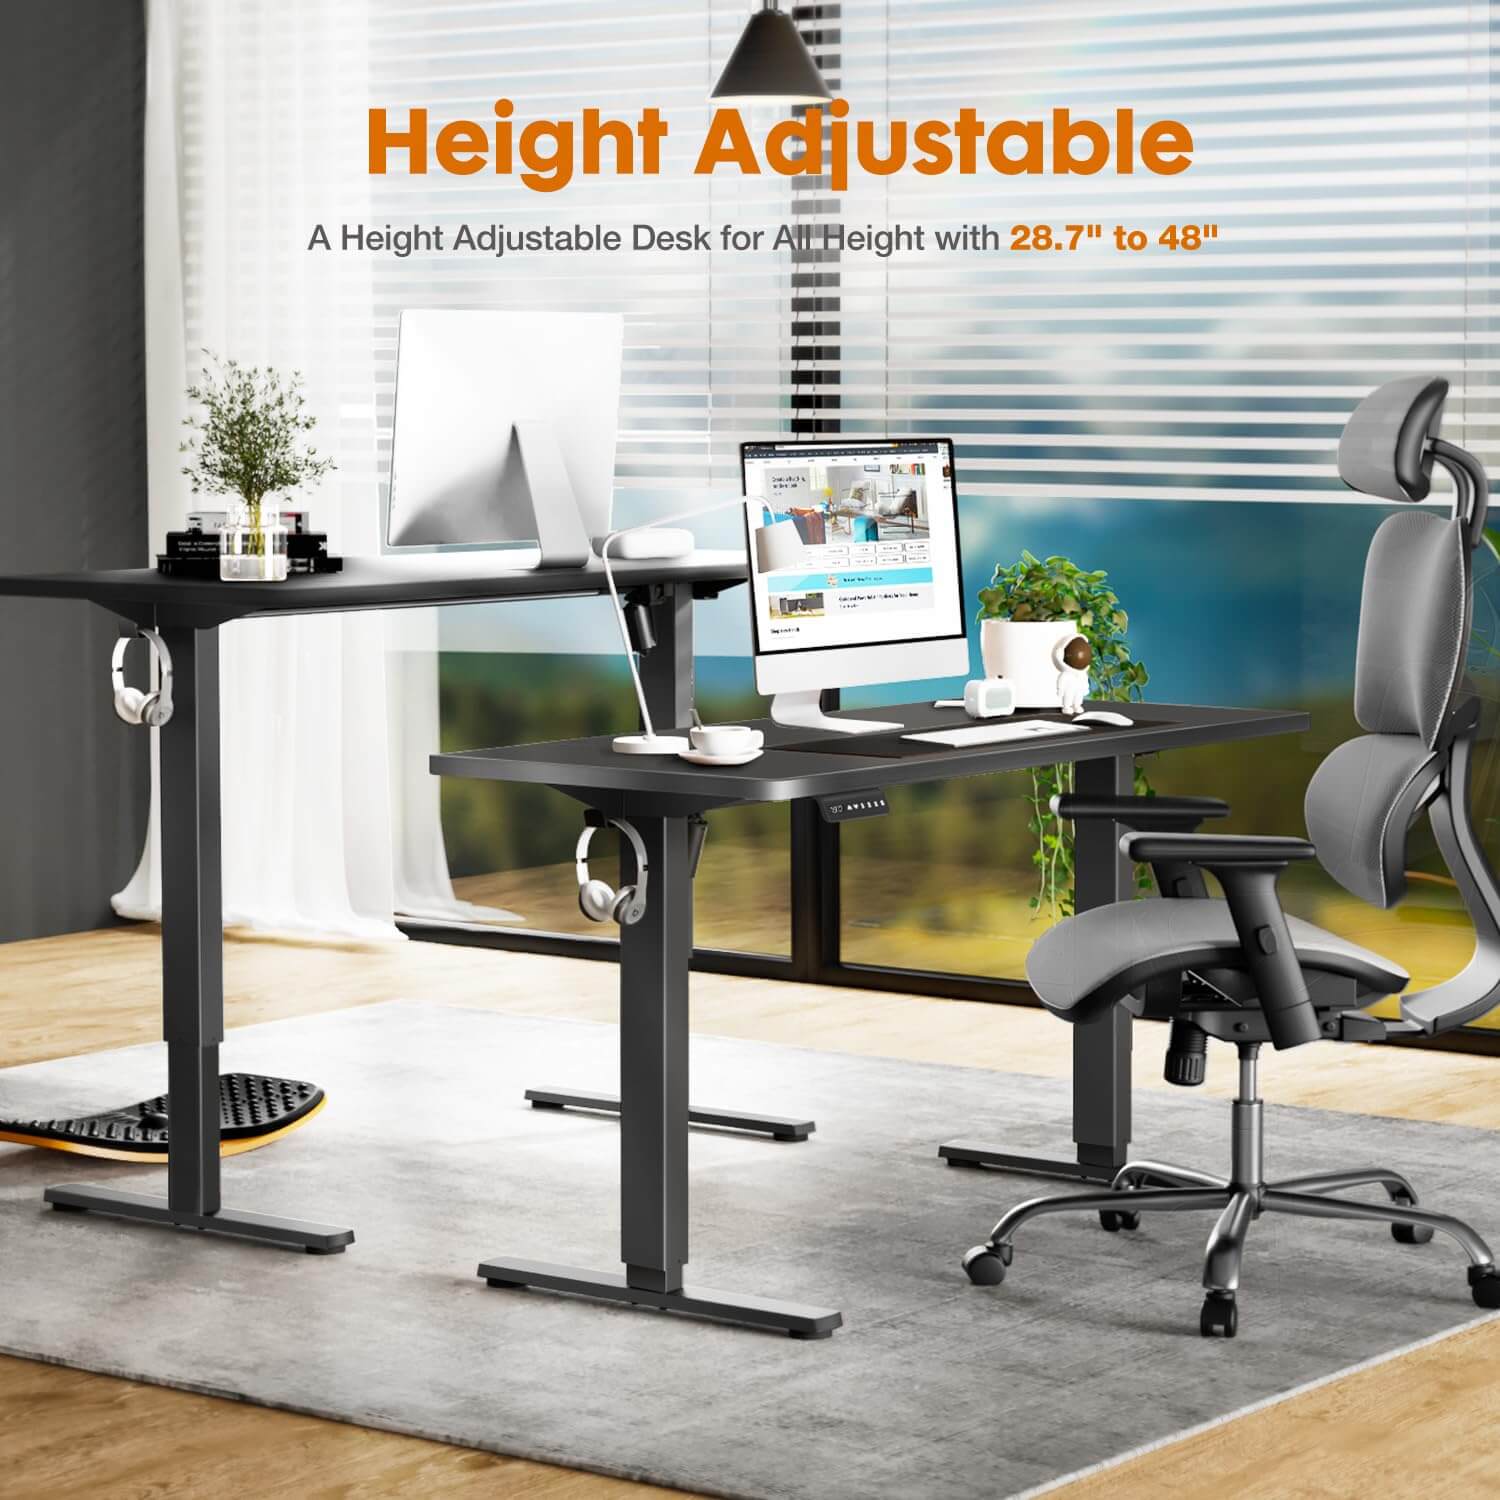 electric-adjustable-standing-desk#Color_Black#Size_40'' x 24"